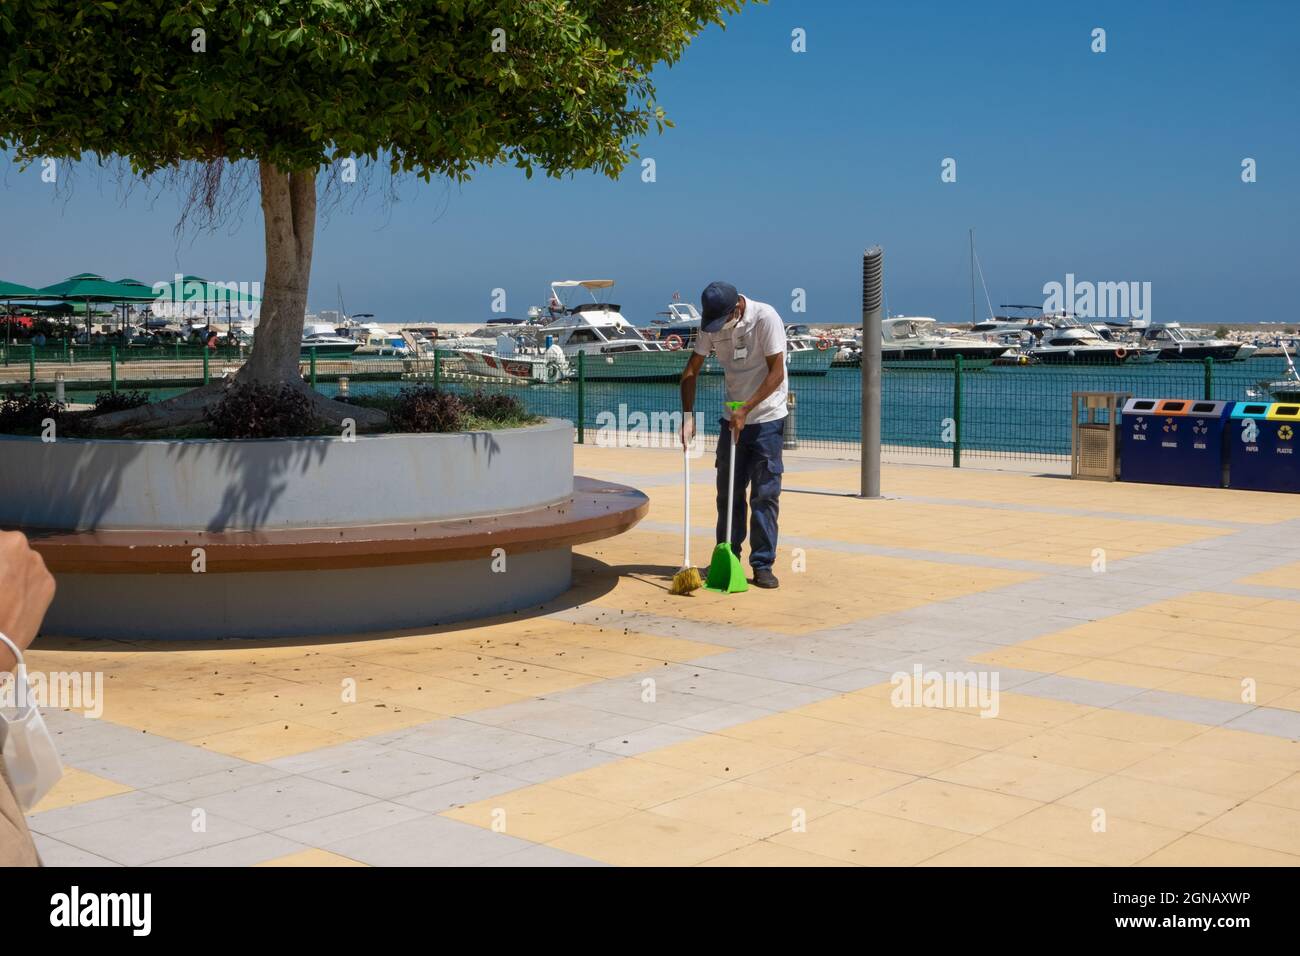 Cleaning man sweeping floor in marina, under big tree. Stock Photo